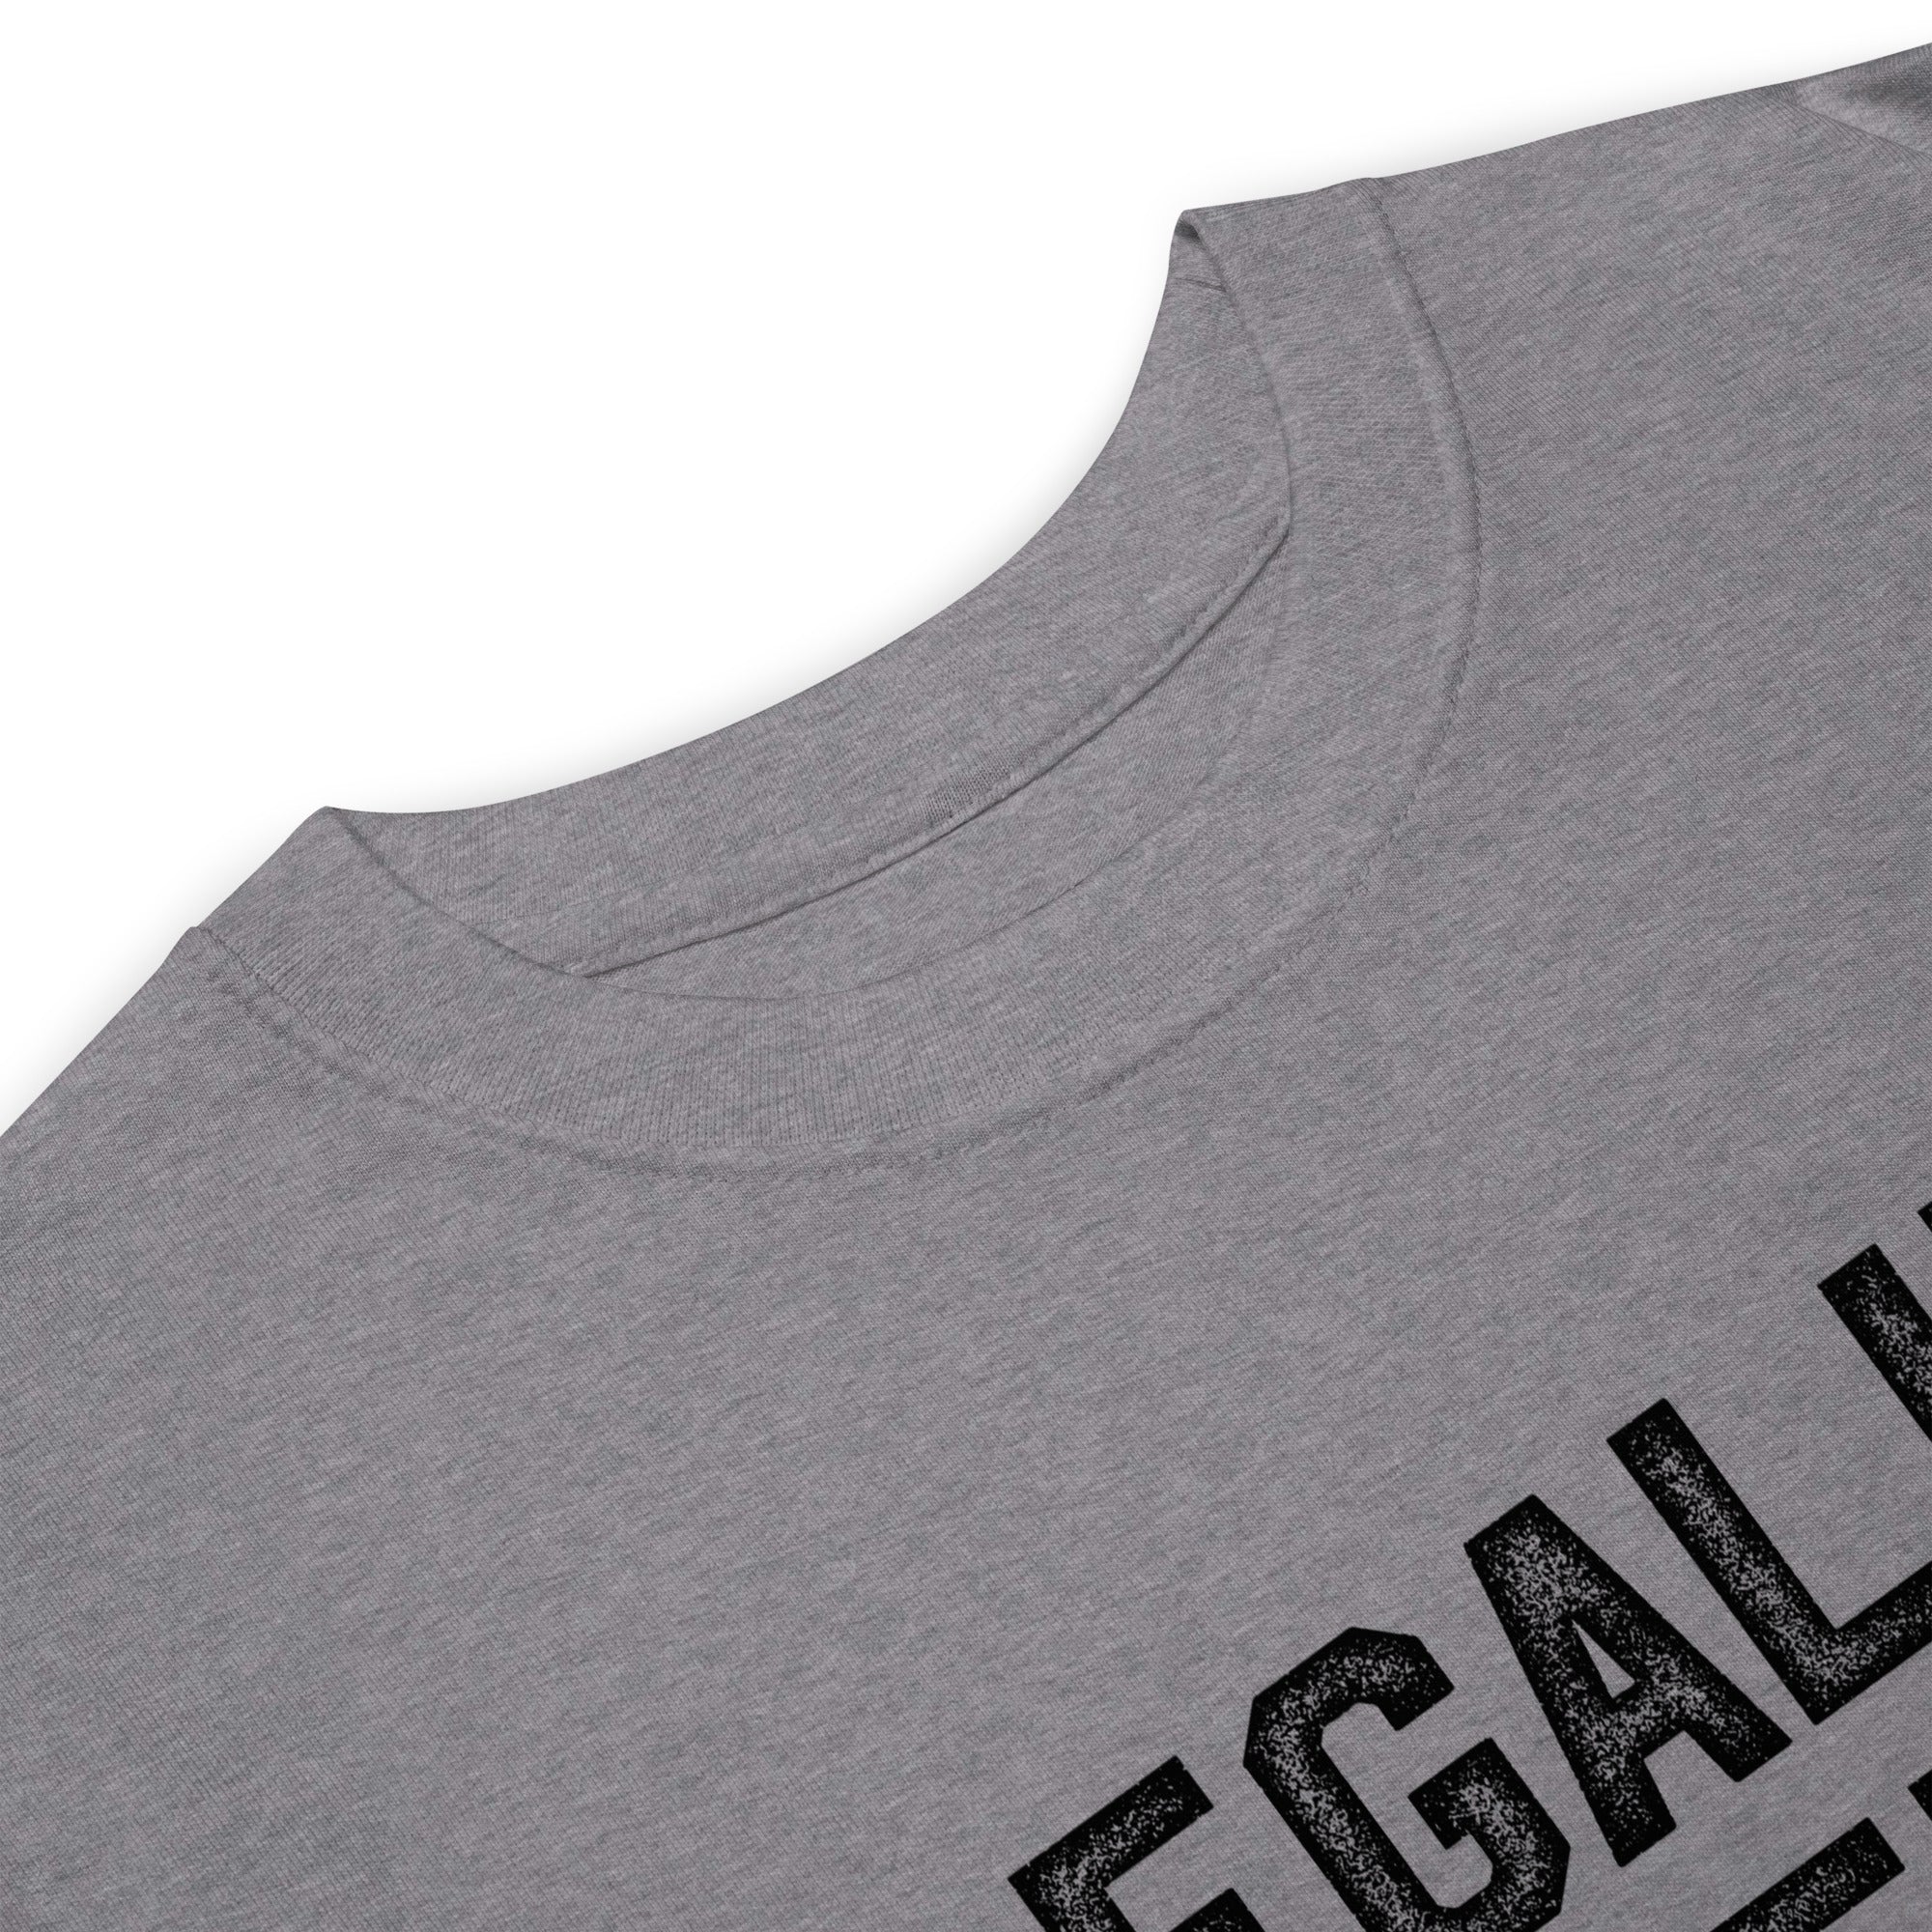 Legalize Freedom Men’s Heavyweight T-shirt